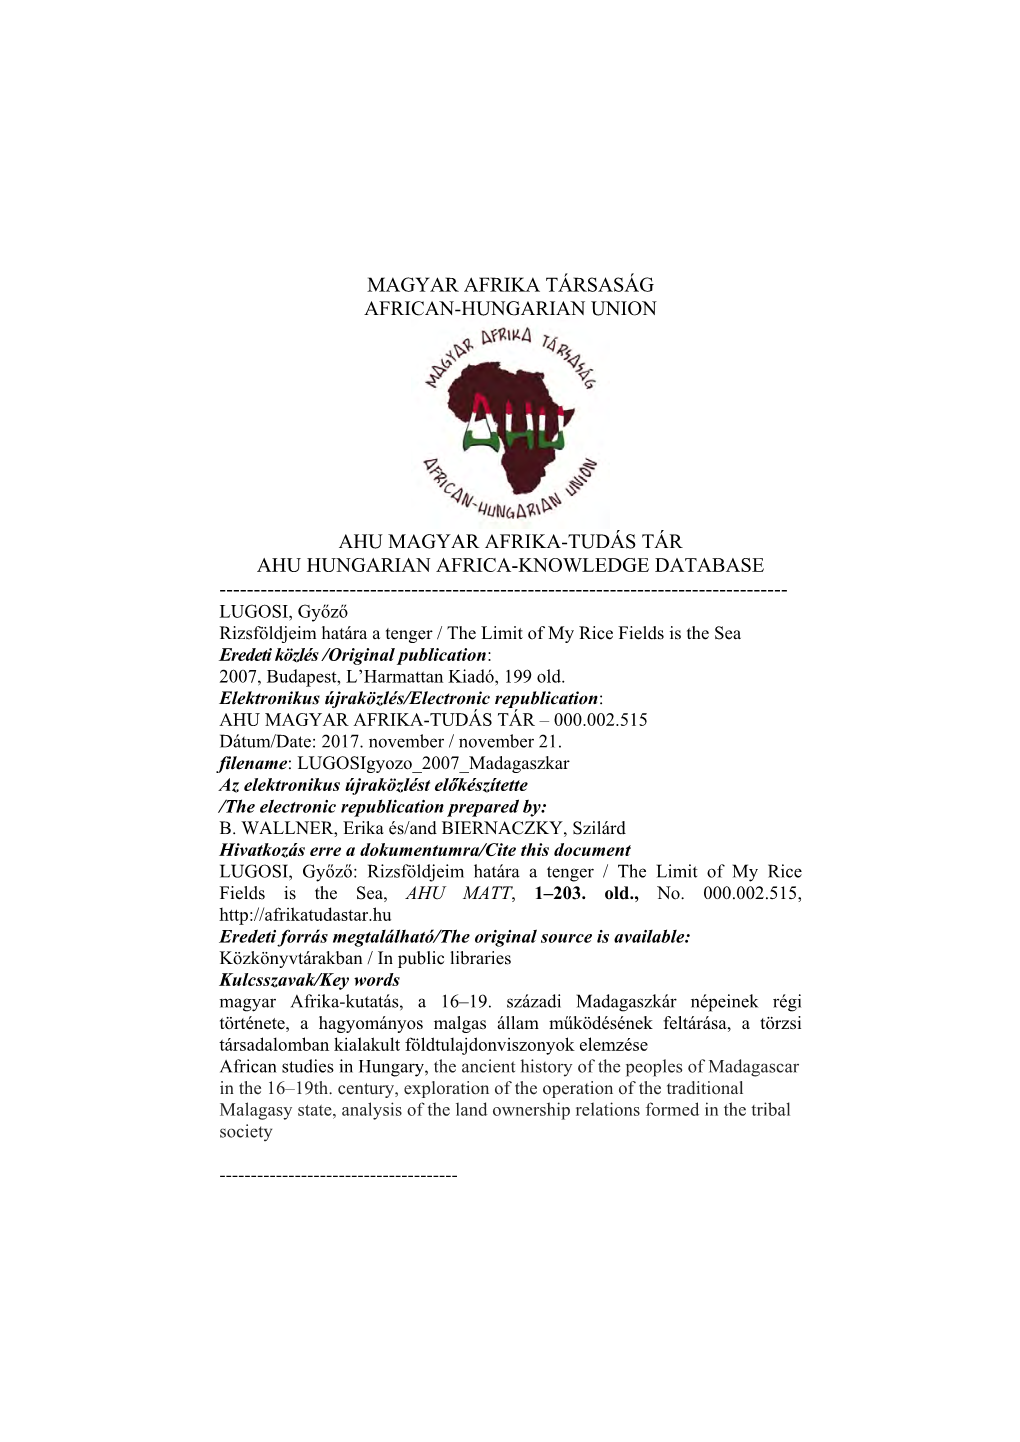 Magyar Afrika Társaság African-Hungarian Union